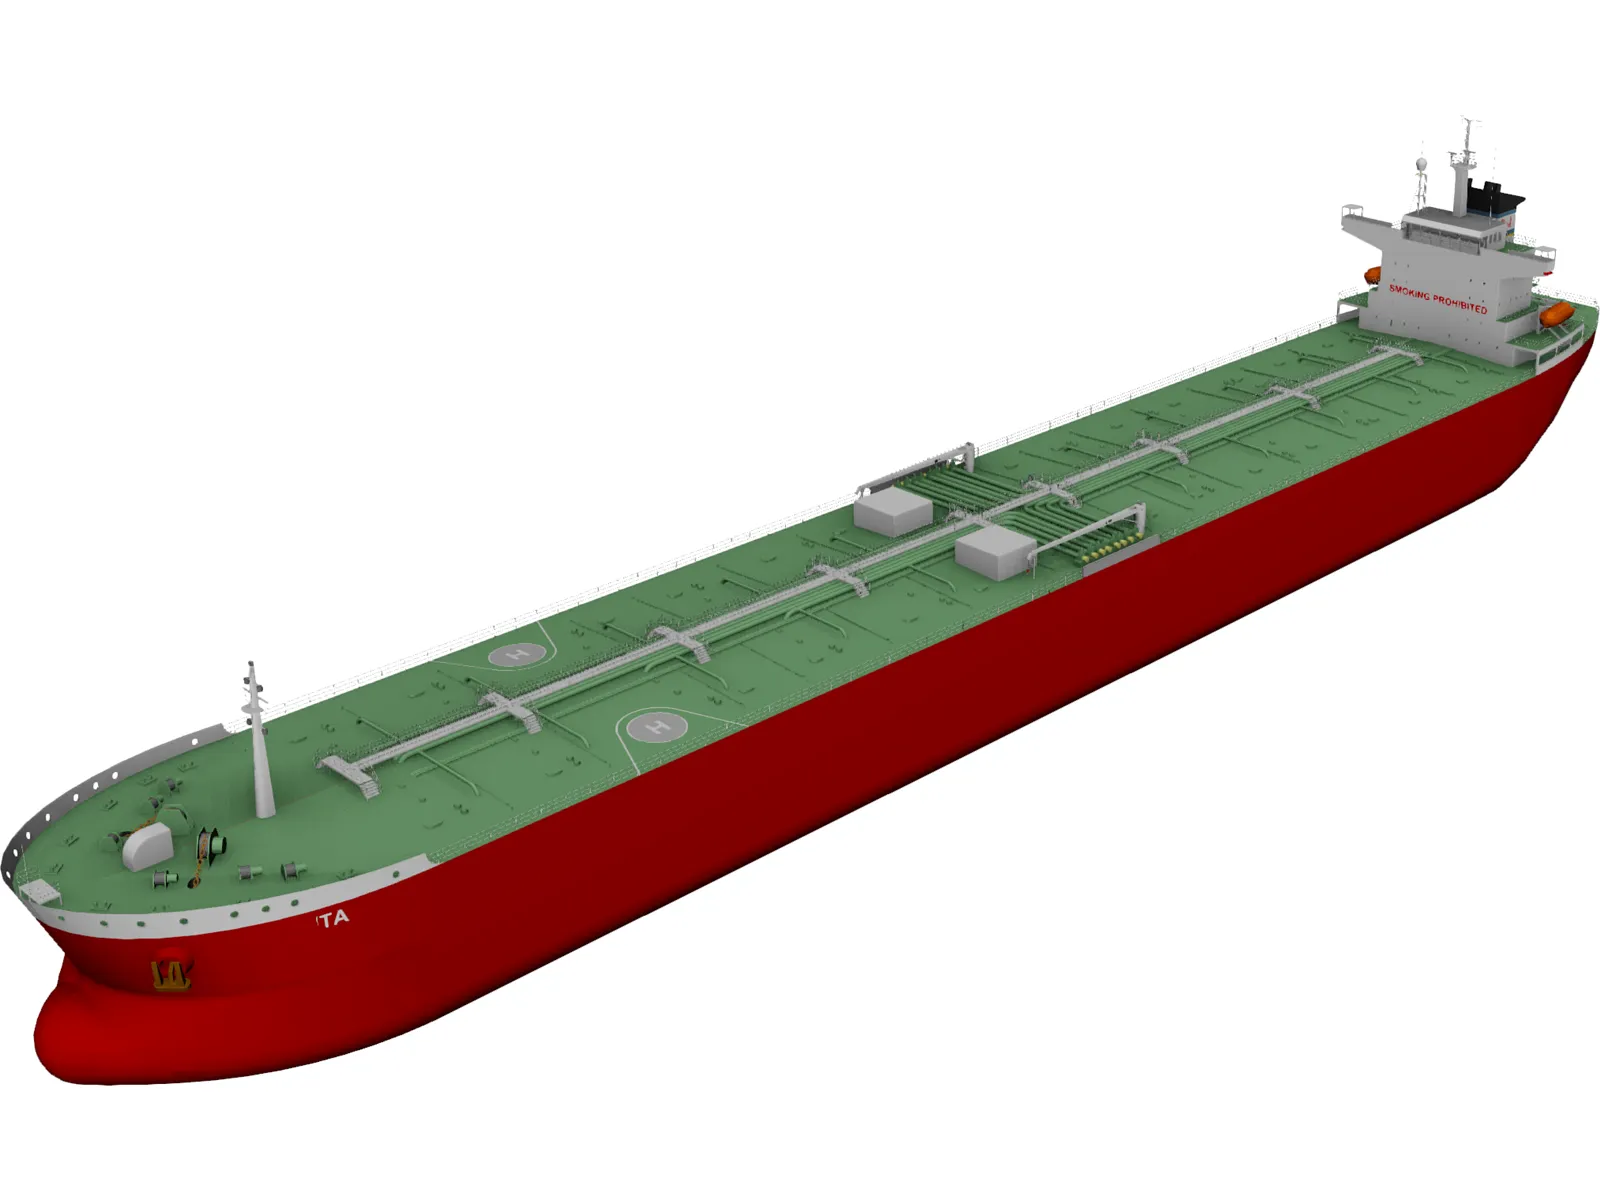 Panamax Oil Tanker 3D Model